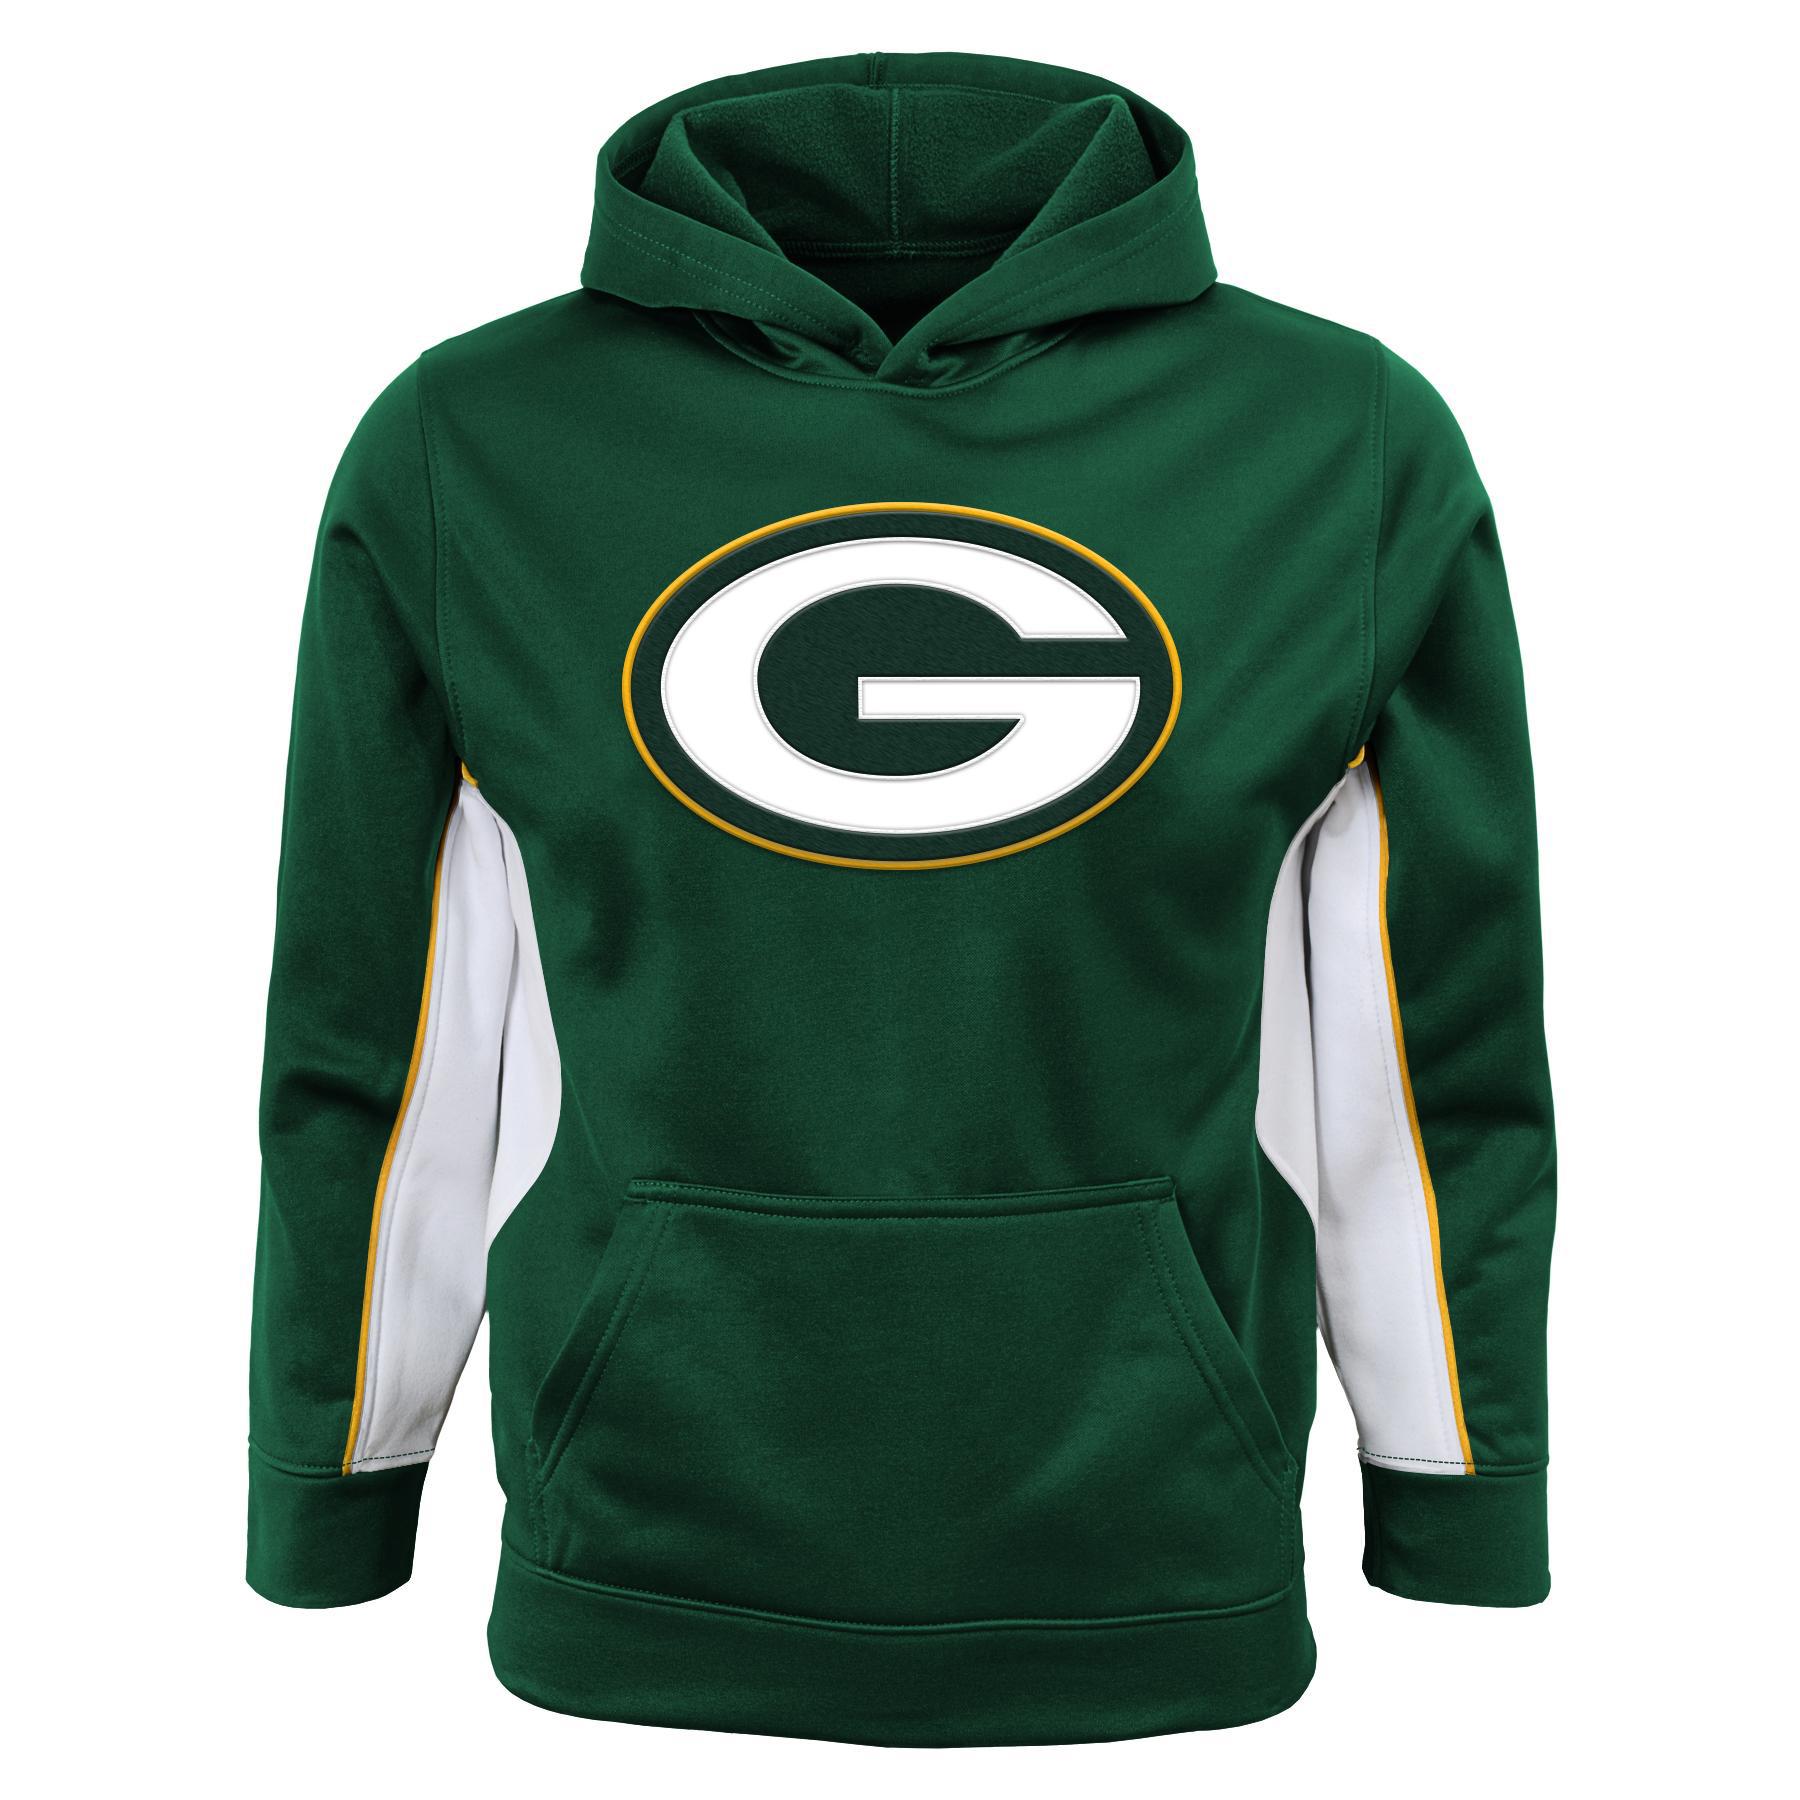 NFL Boys' Hooded Sweatshirt - Green Bay Packers